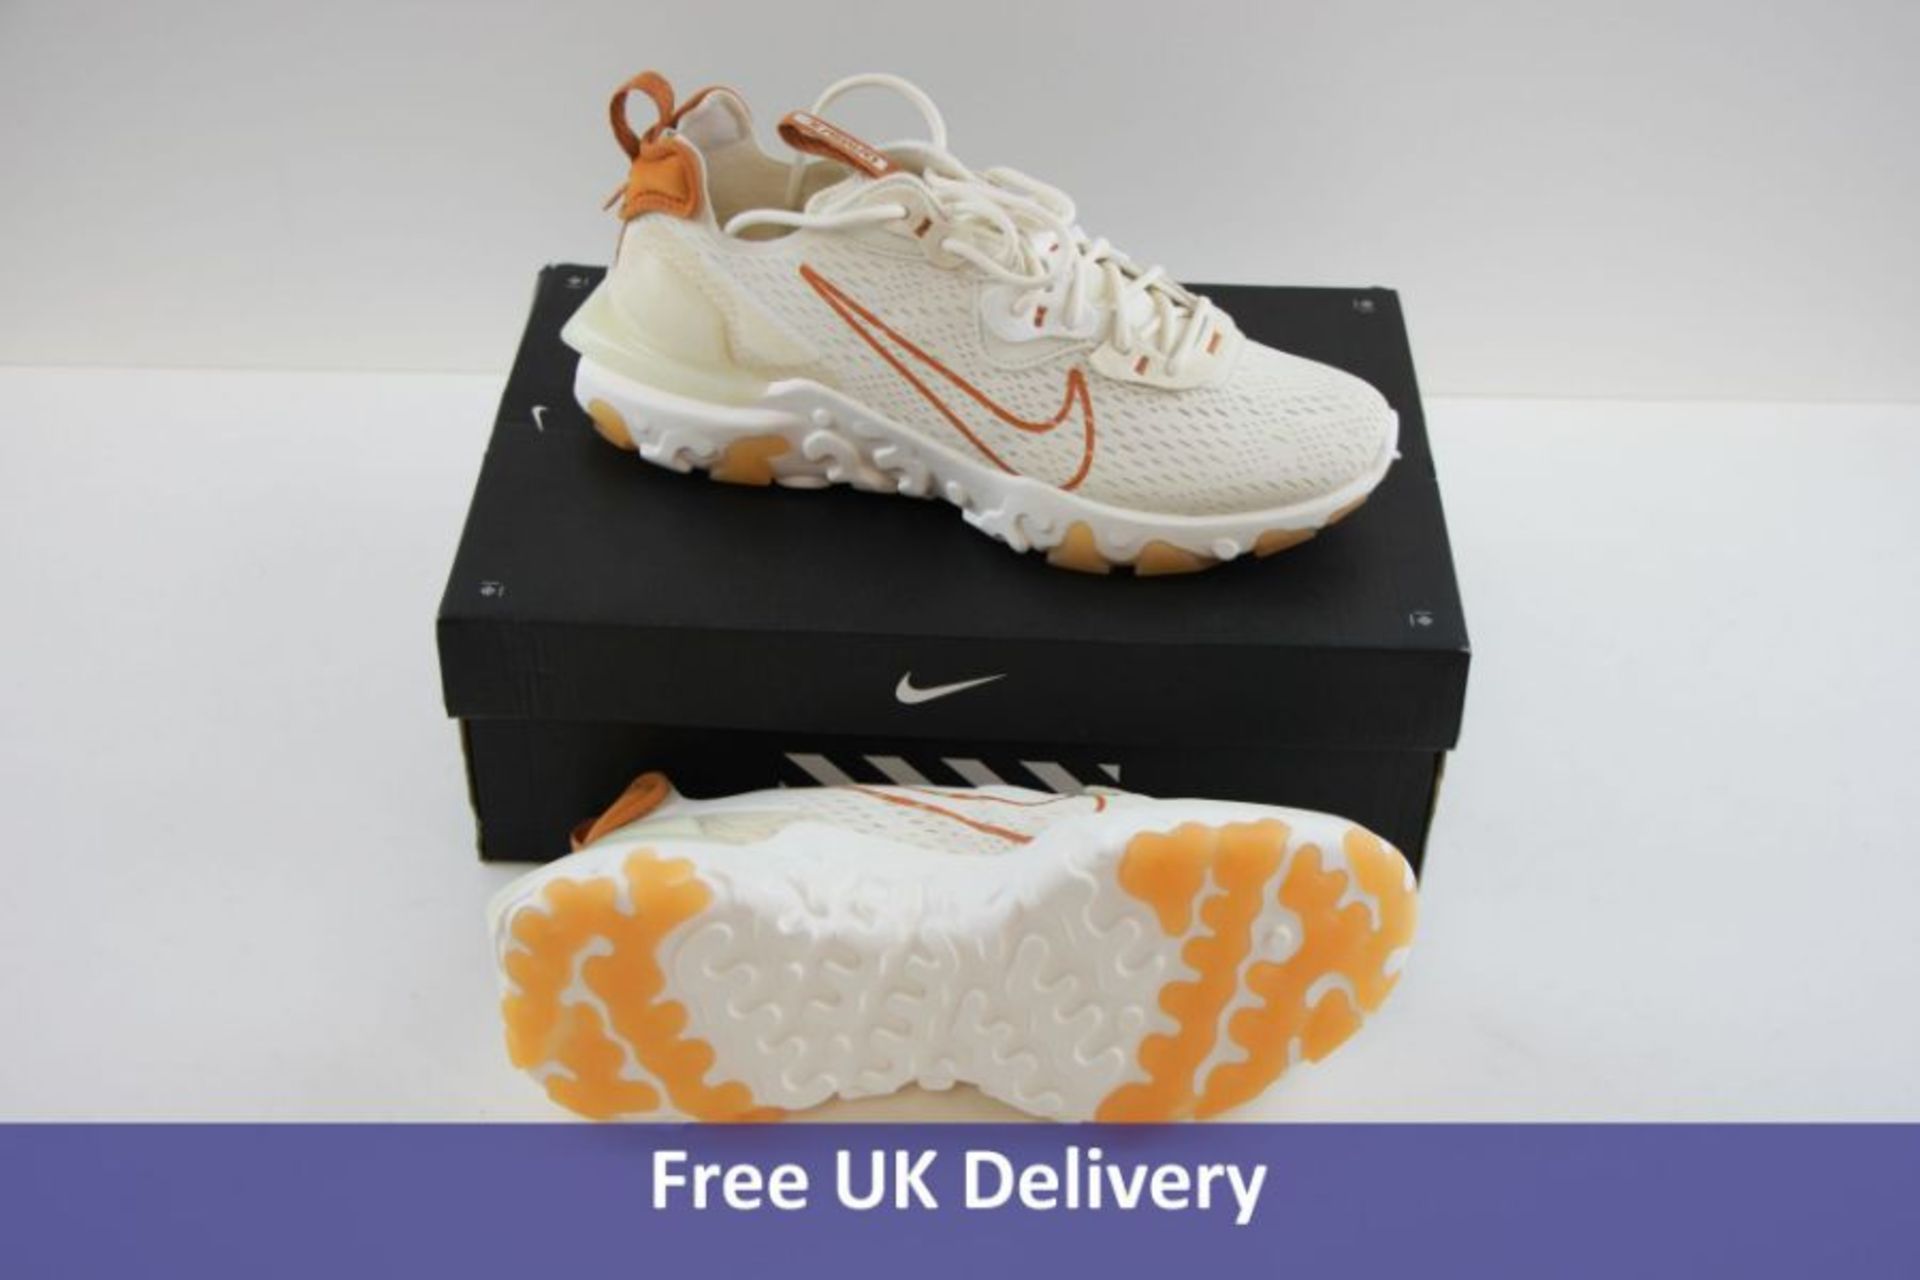 Nike Women's React Vision Trainers, Cream and Orange, UK 8